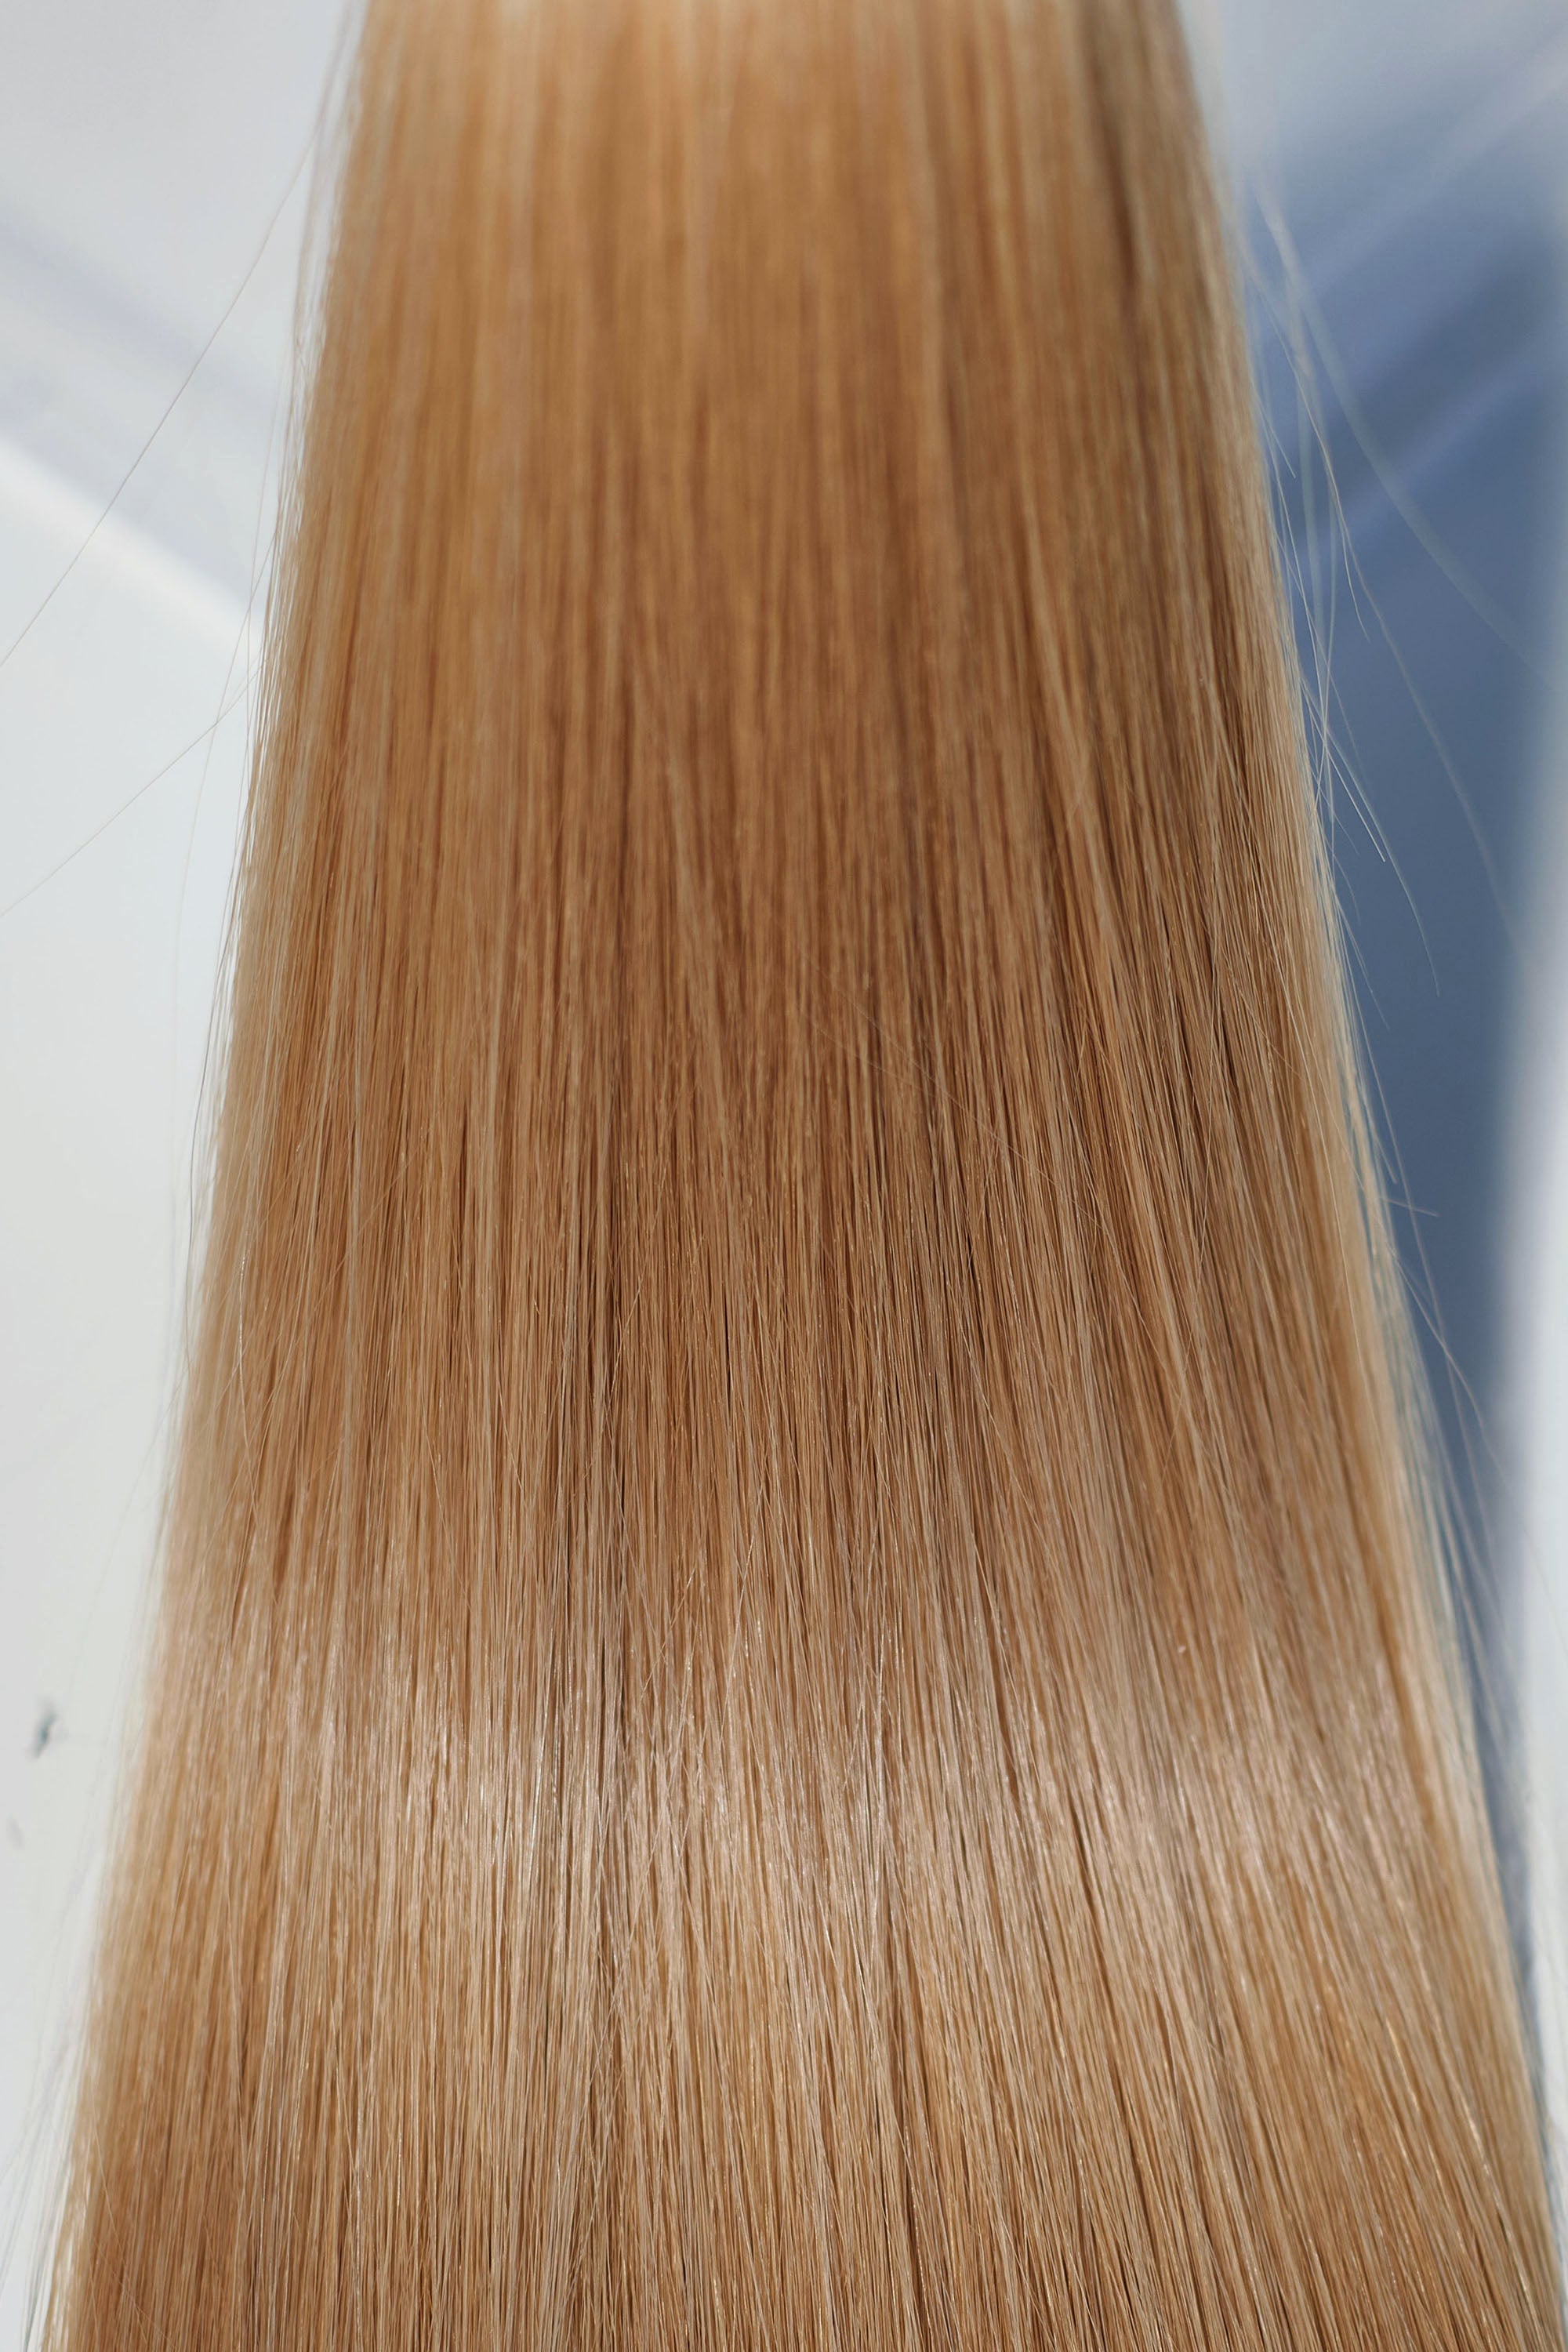 Behair professional Keratin Tip "Premium" 20" (50cm) Natural Straight Gold Sand #18 - 25g (Standart - 0.7g each pcs) hair extensions